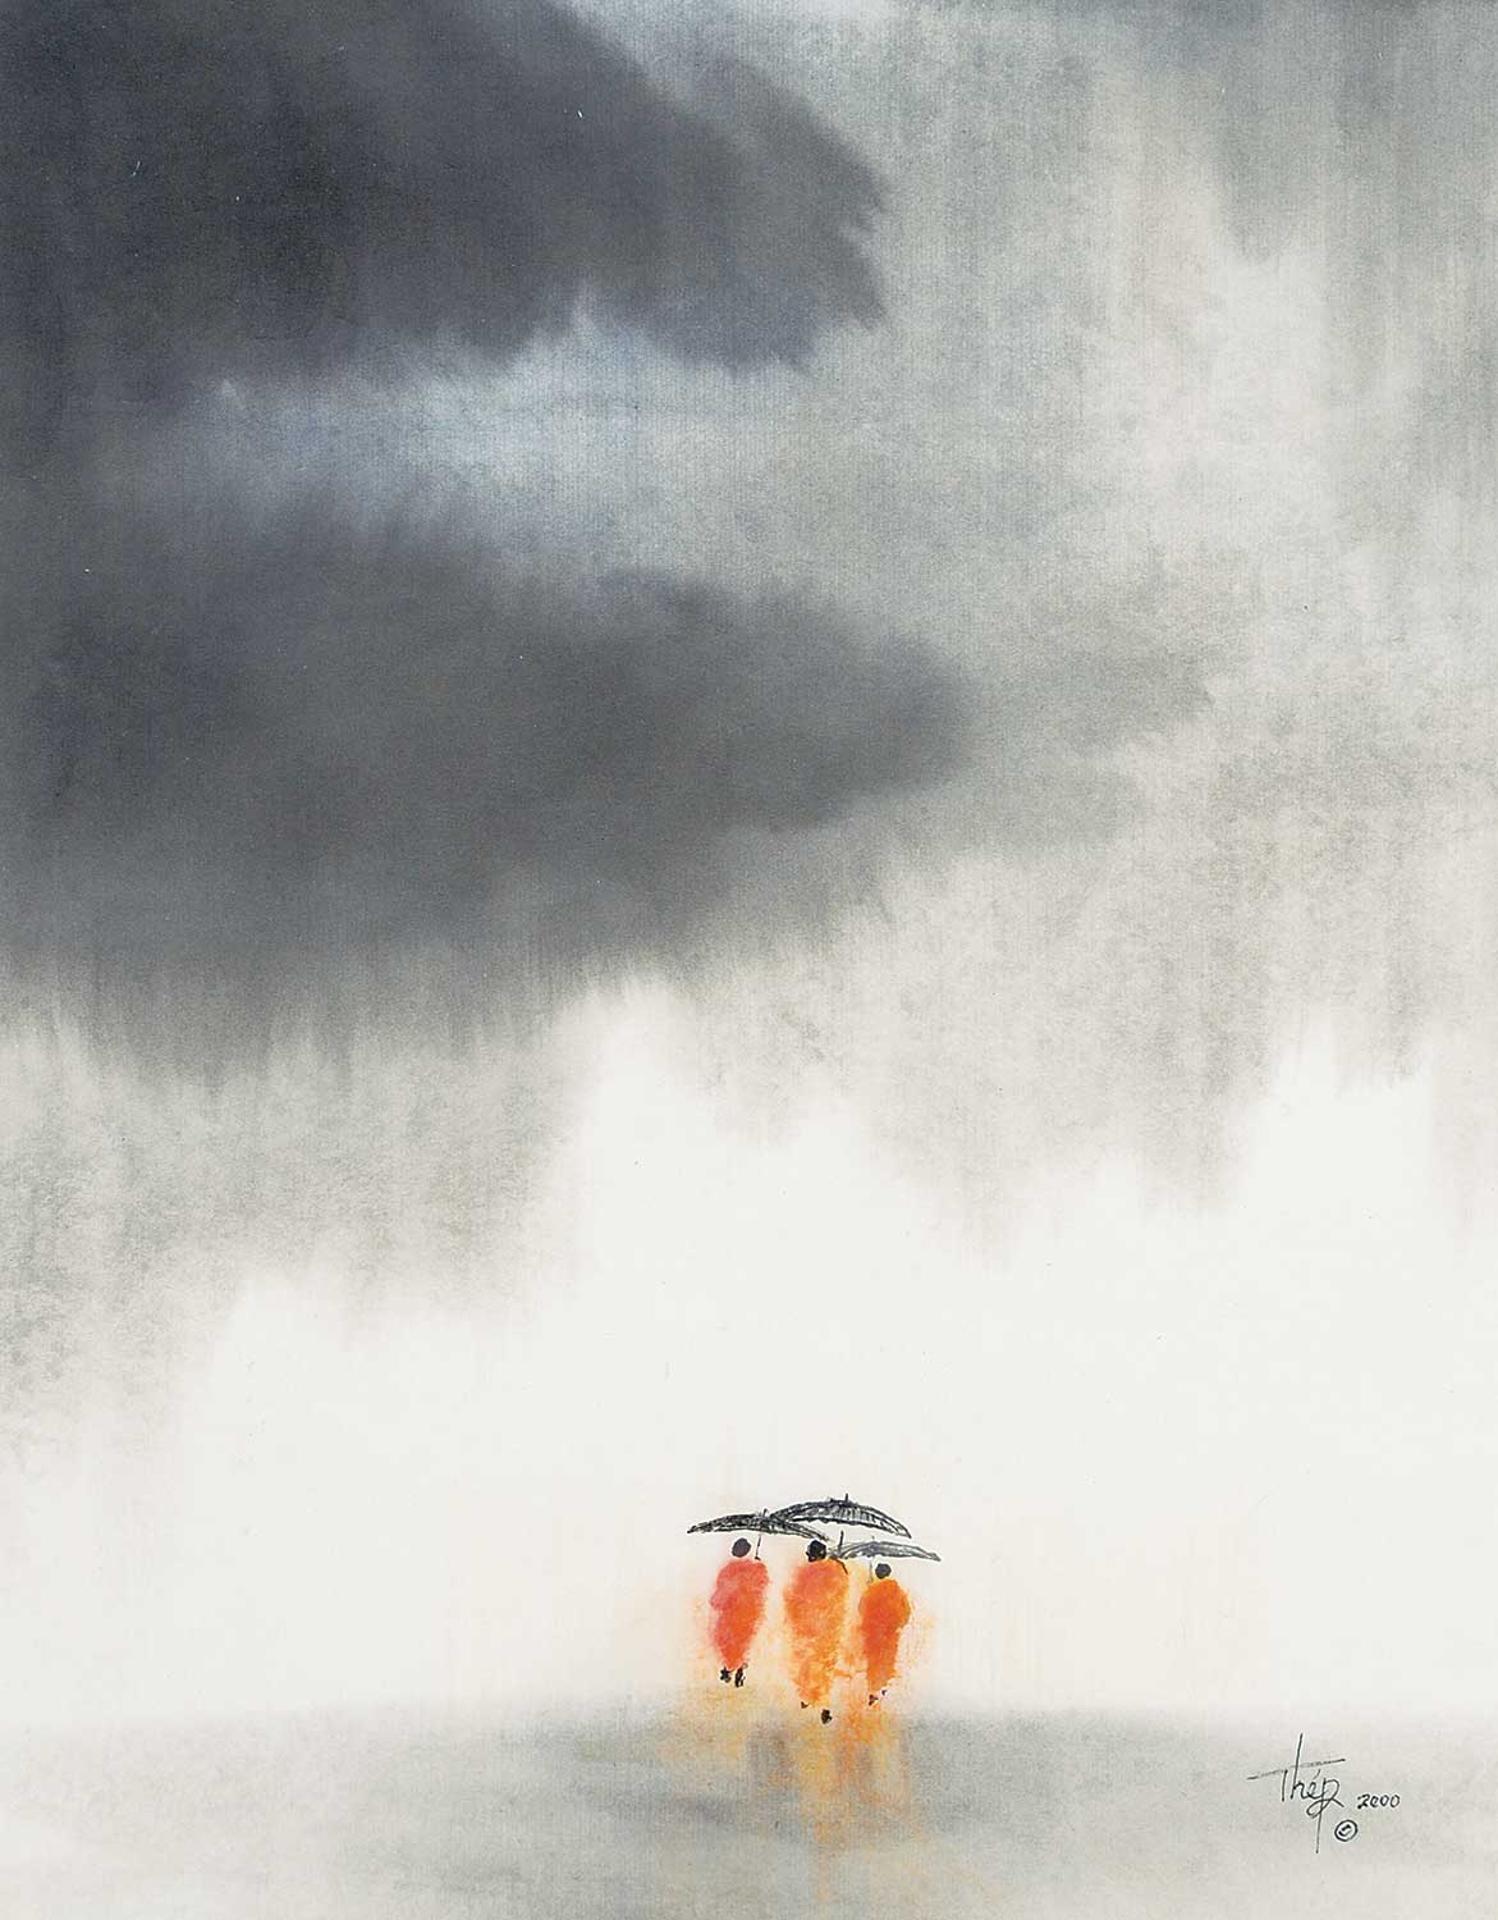 Thep Thavonsouk - Untitled - Three Monks in the Rain